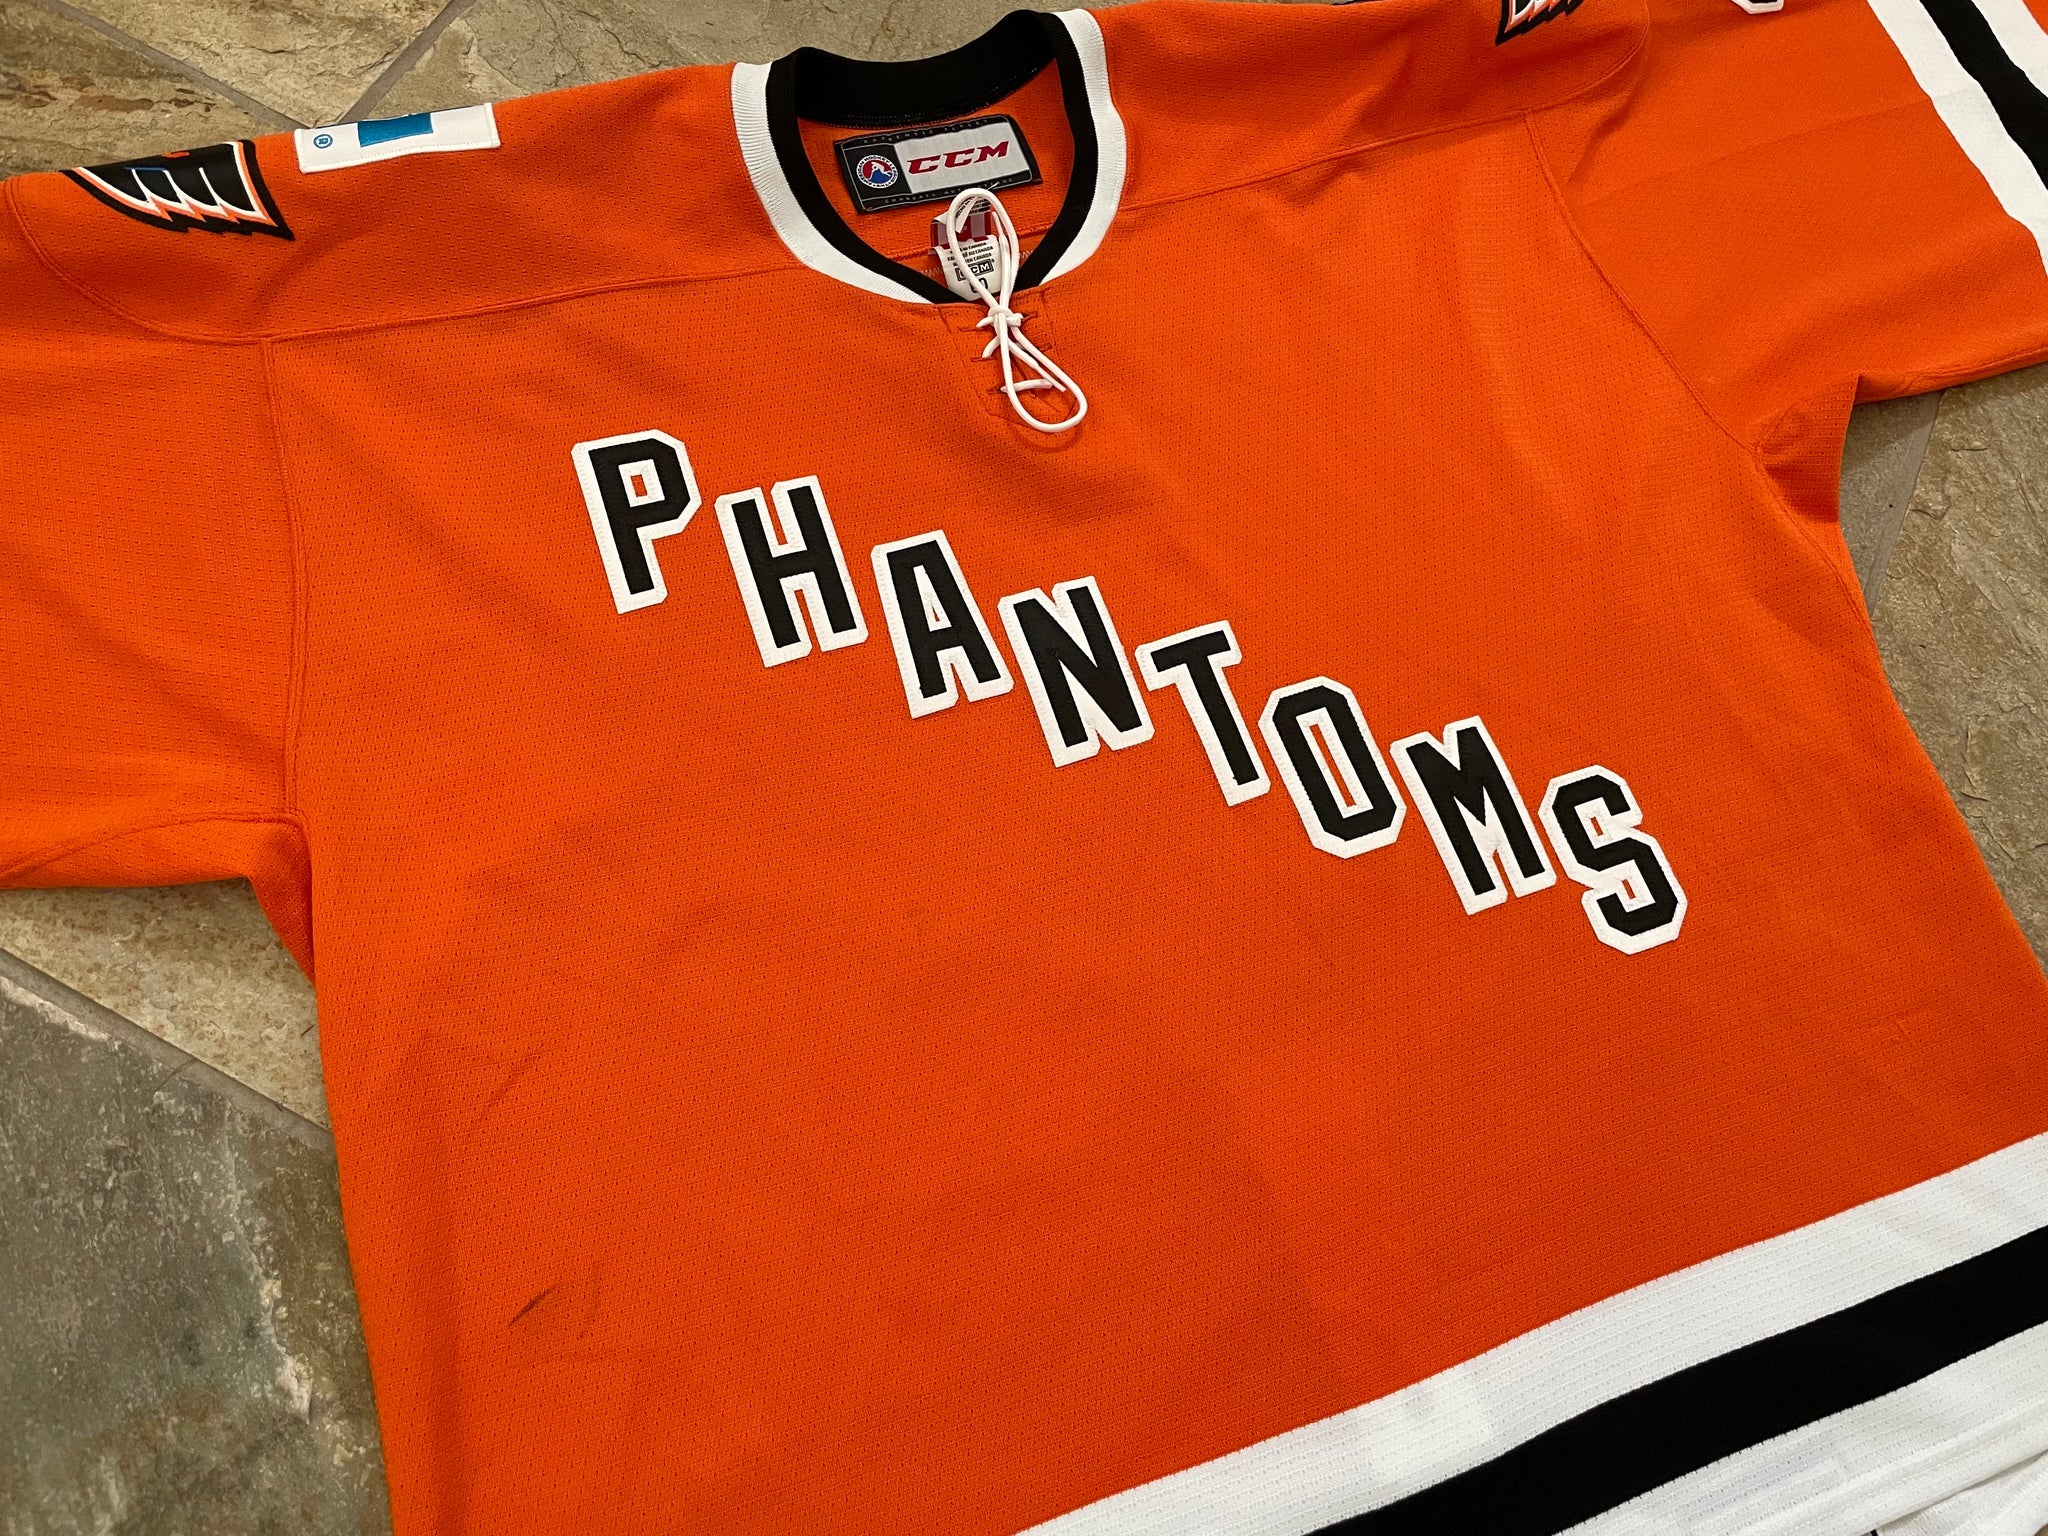 Lehigh Valley Phantoms CCM Hockey Jersey Size L Flyers Minor Team